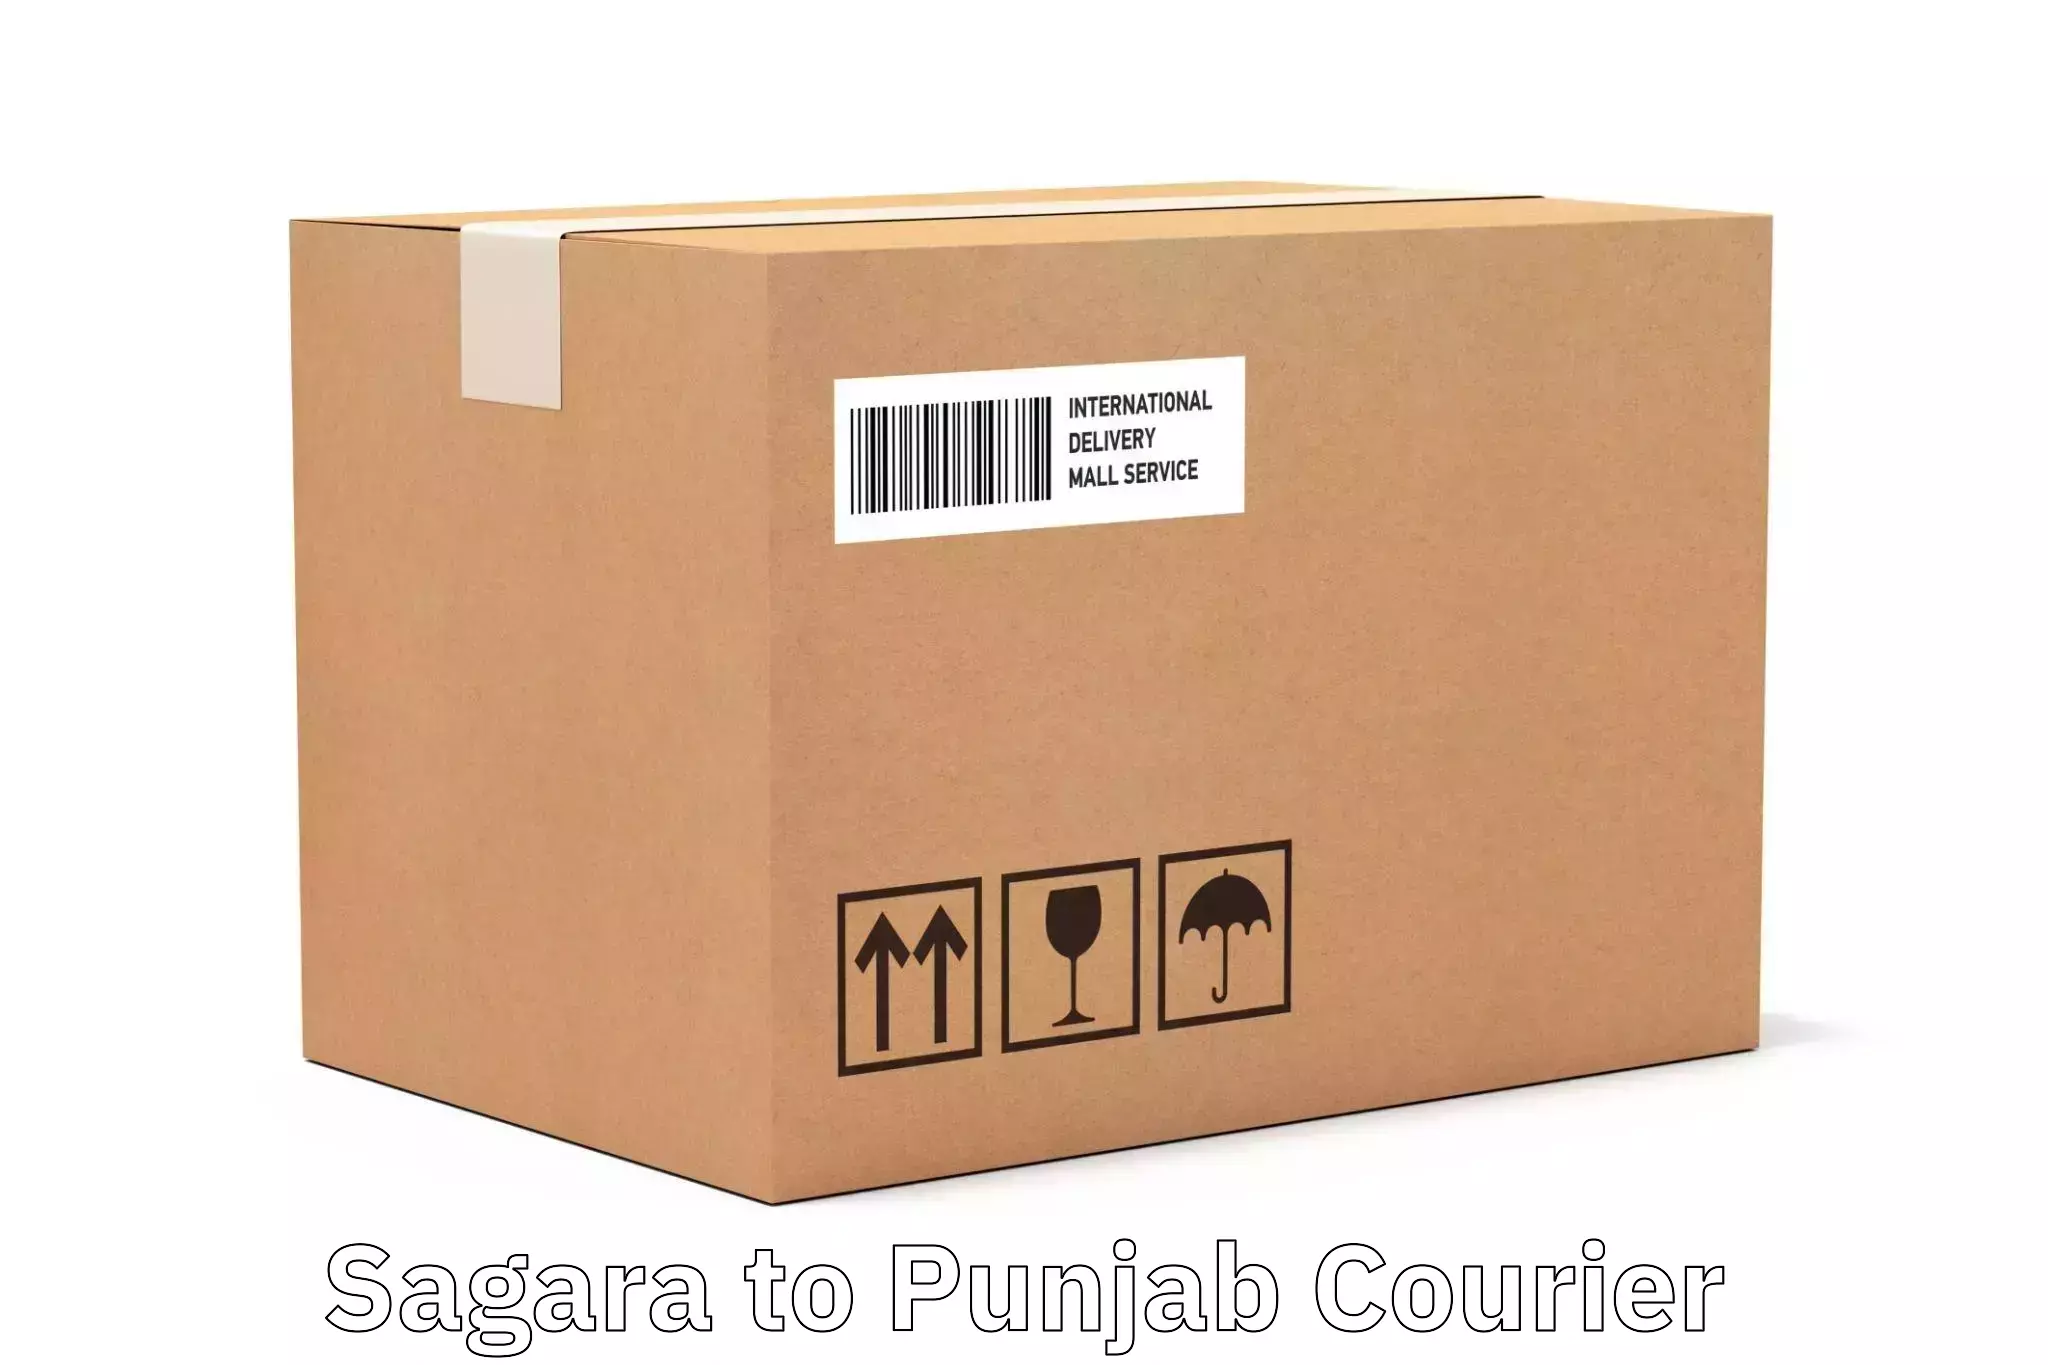 User-friendly delivery service Sagara to Punjab